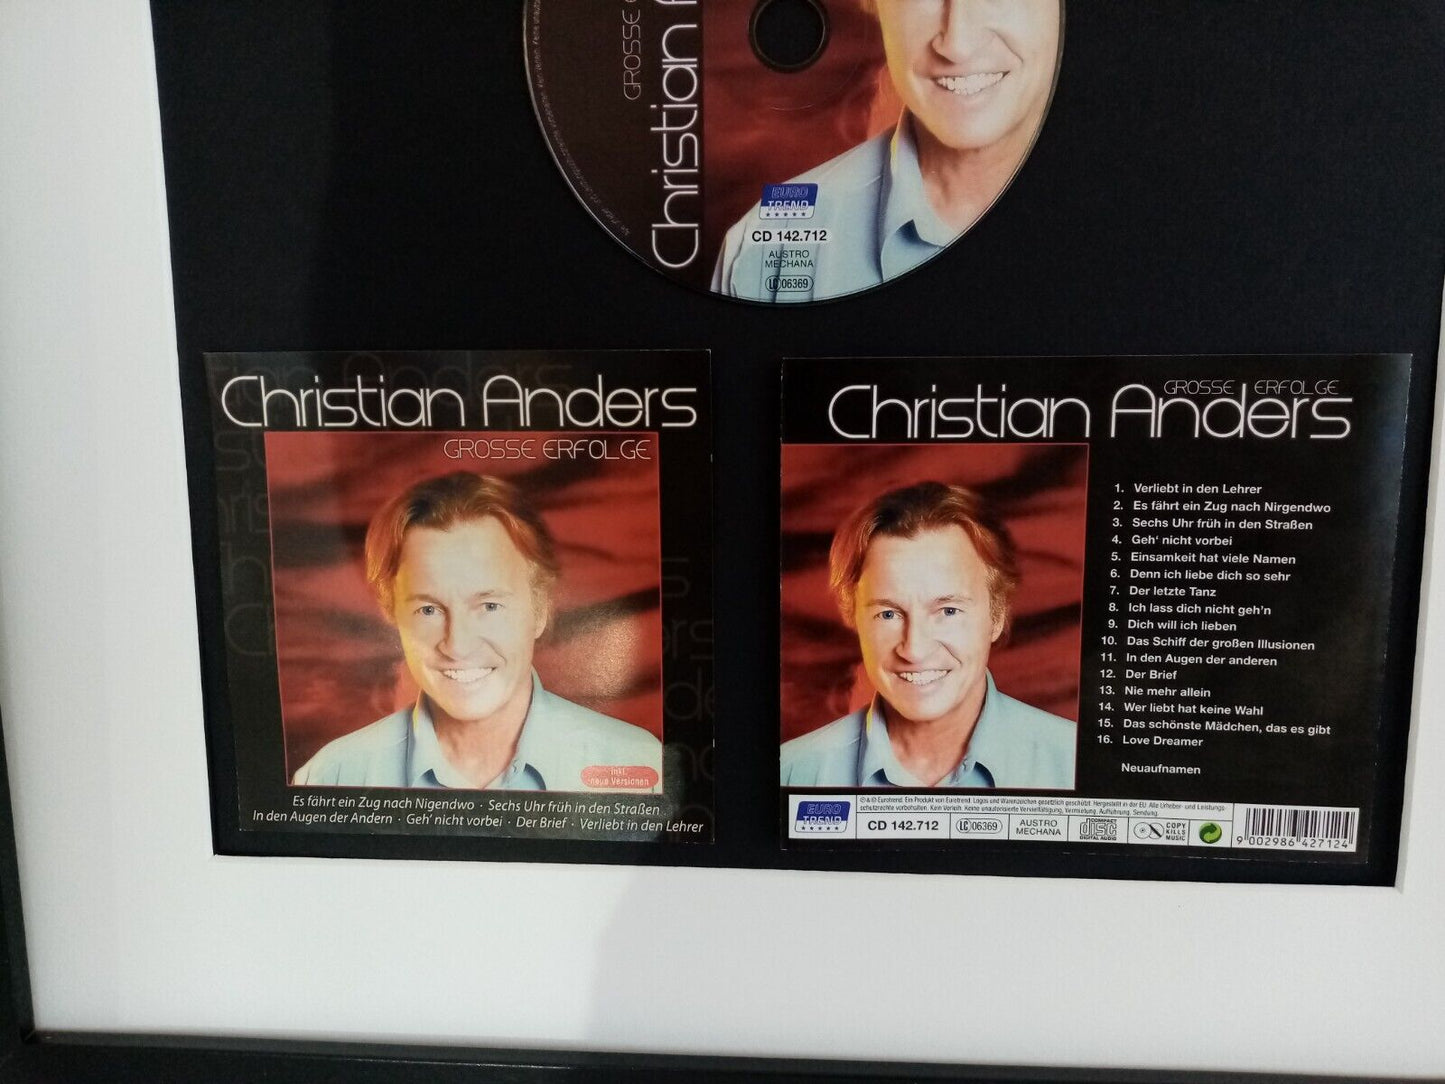 CD / Rohling Christian Anders signiert mit Album im Rahmen Autogramm Neu Musik